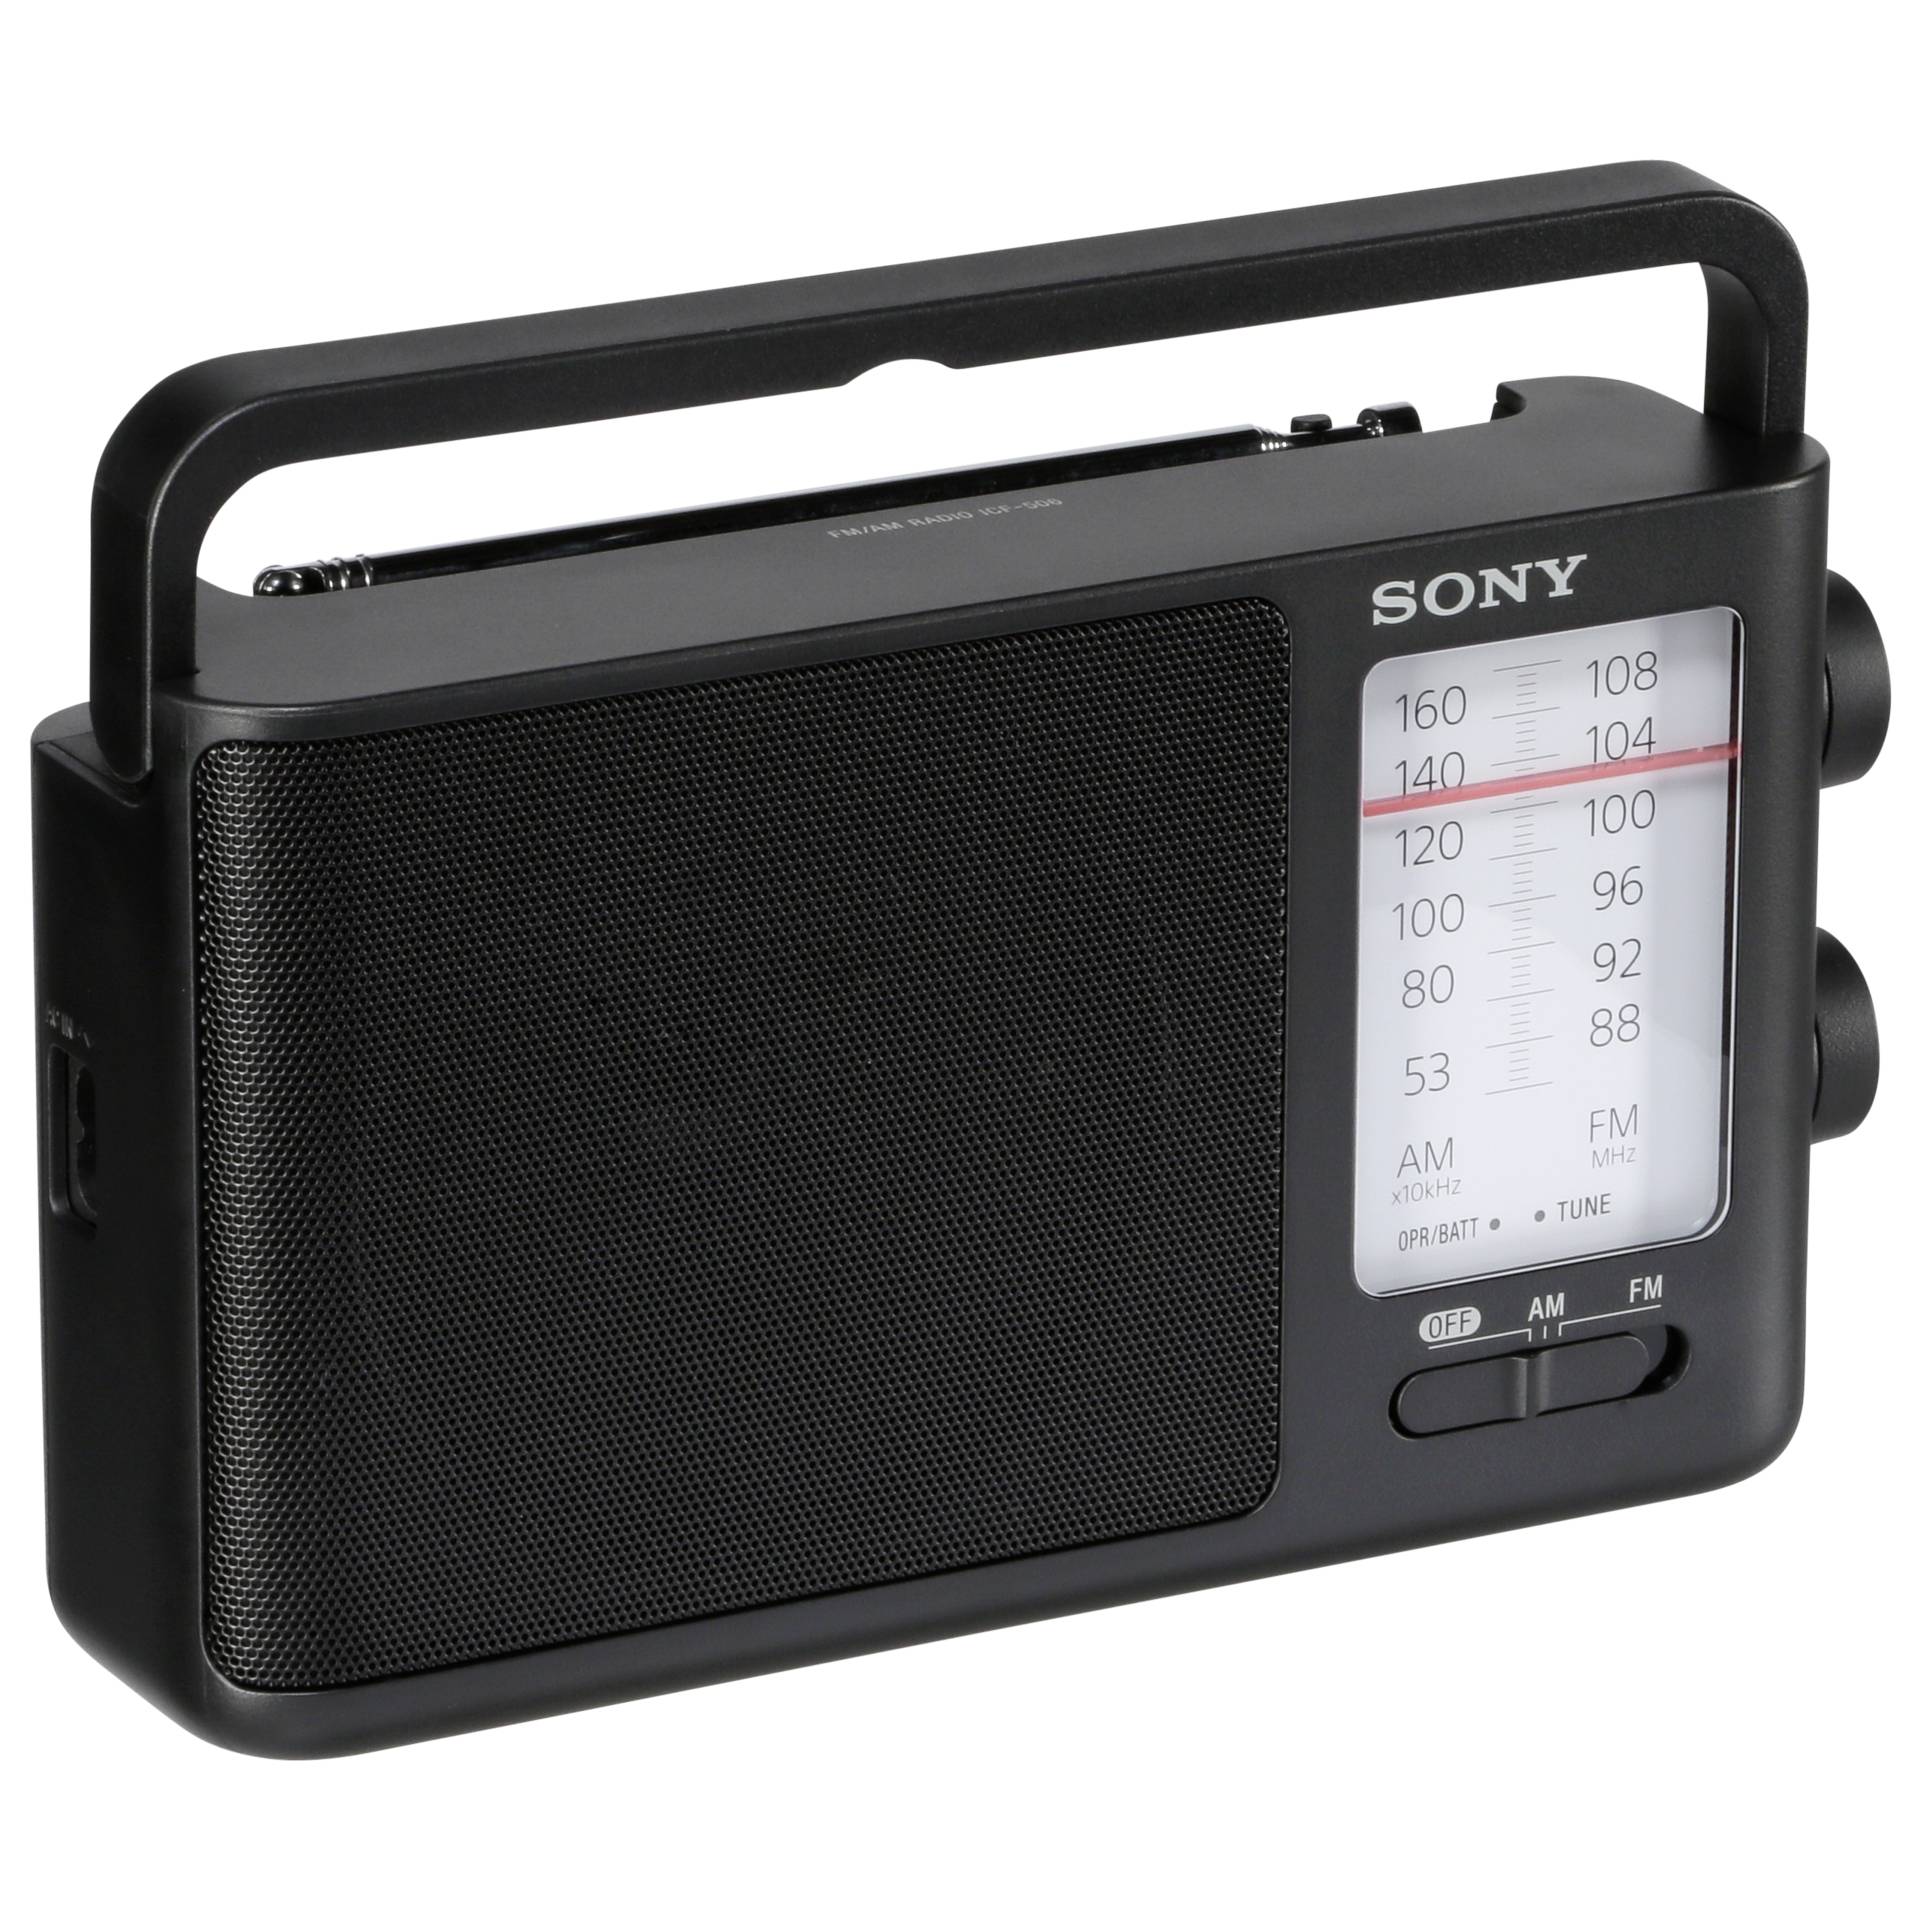 -Radio -Sony ICF-506 Sony Accessories